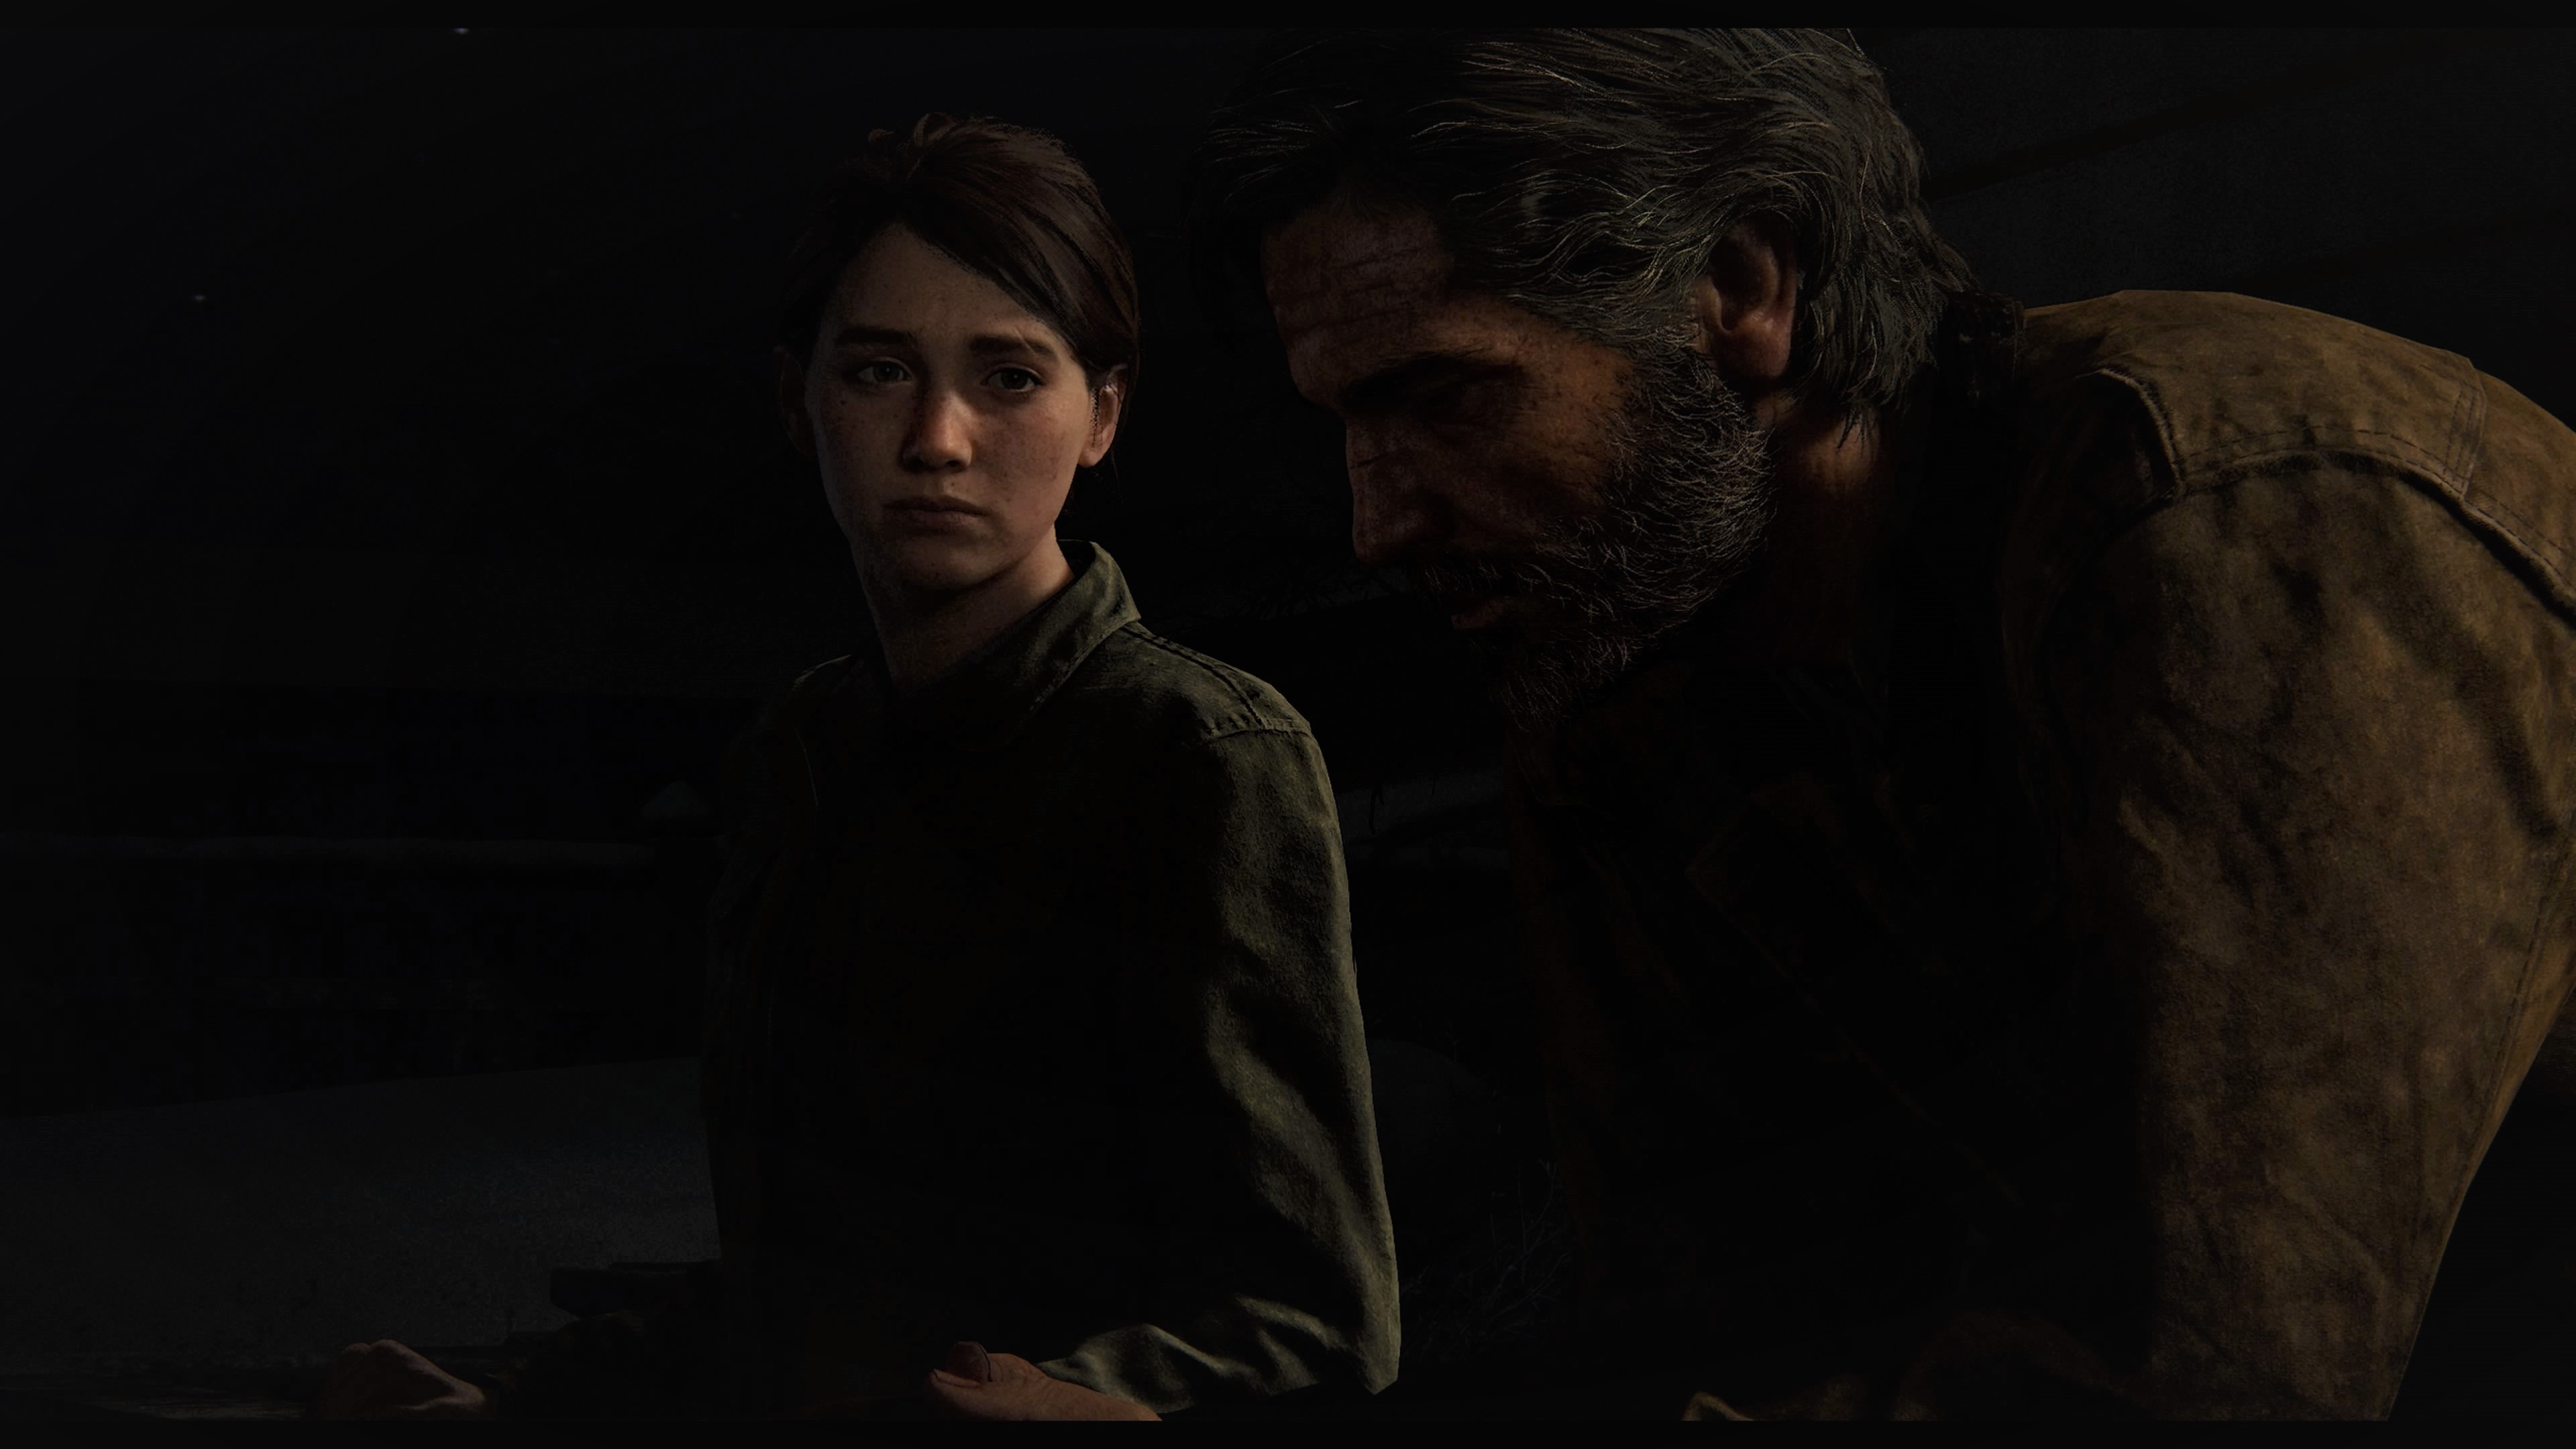 Ellie - The Last of Us [2560x1440] [OC] : r/wallpaper